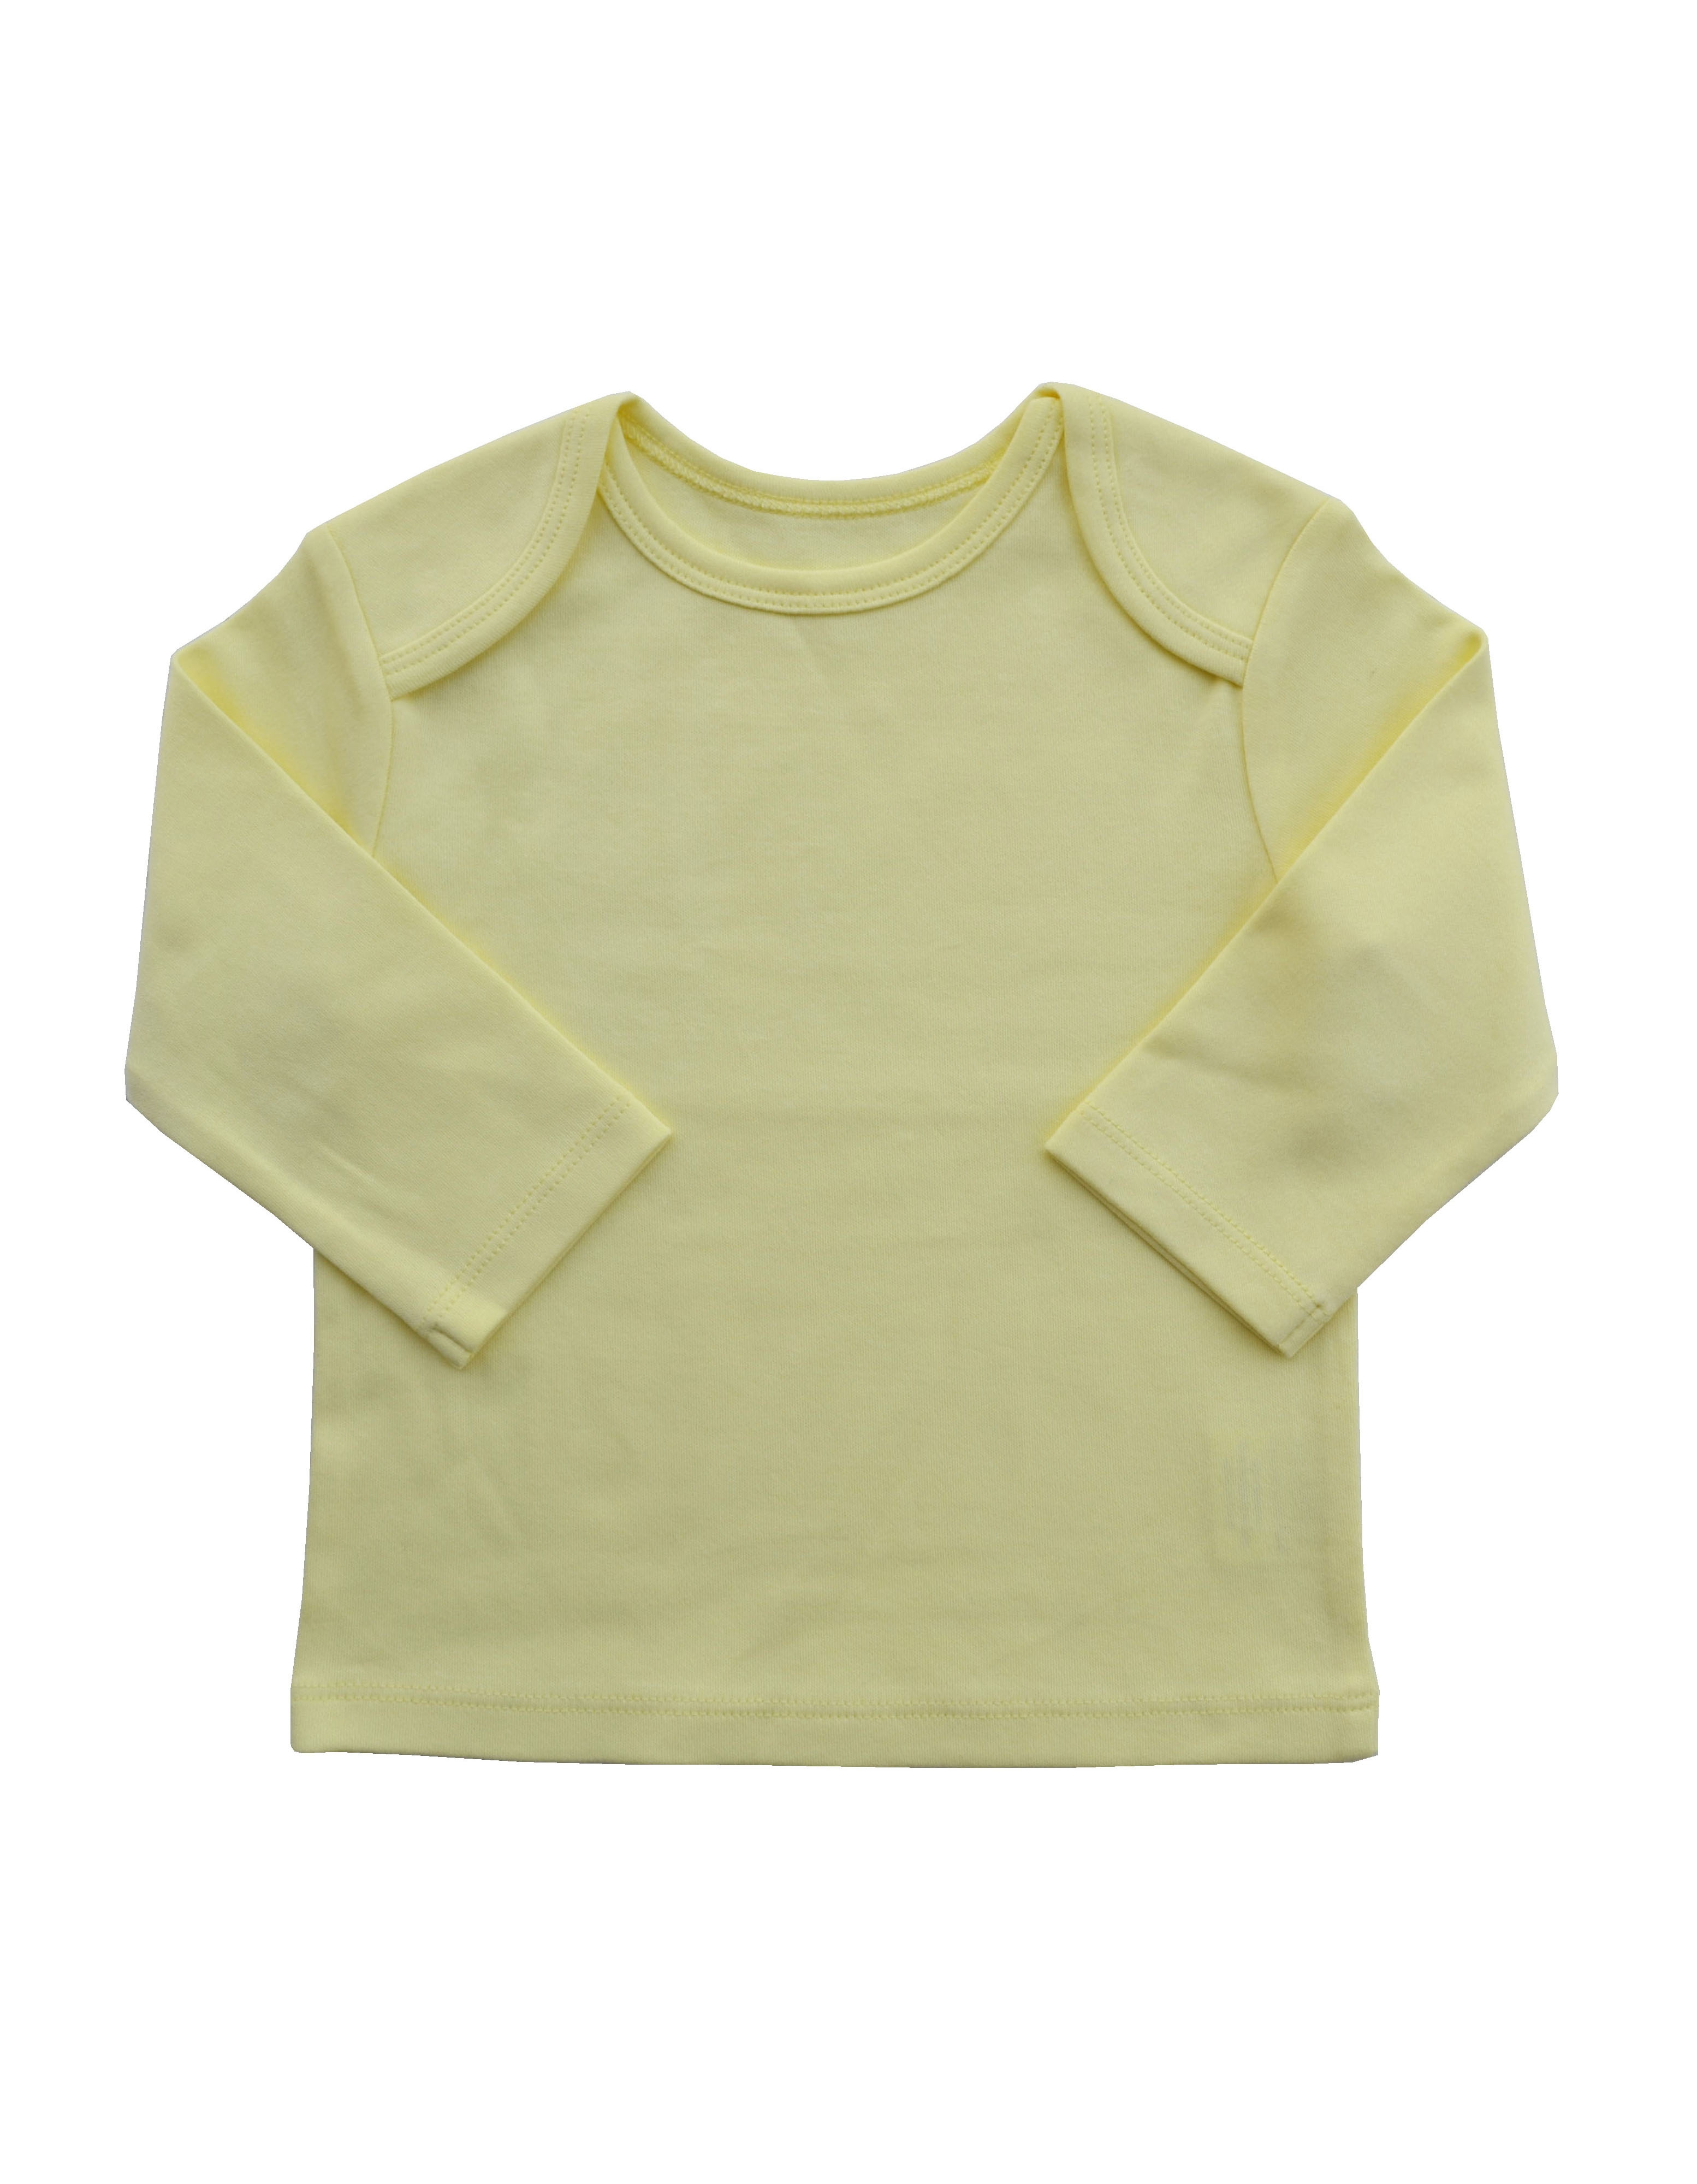 Yellow Long Sleeve Top (100% Cotton Interlock Biowash)